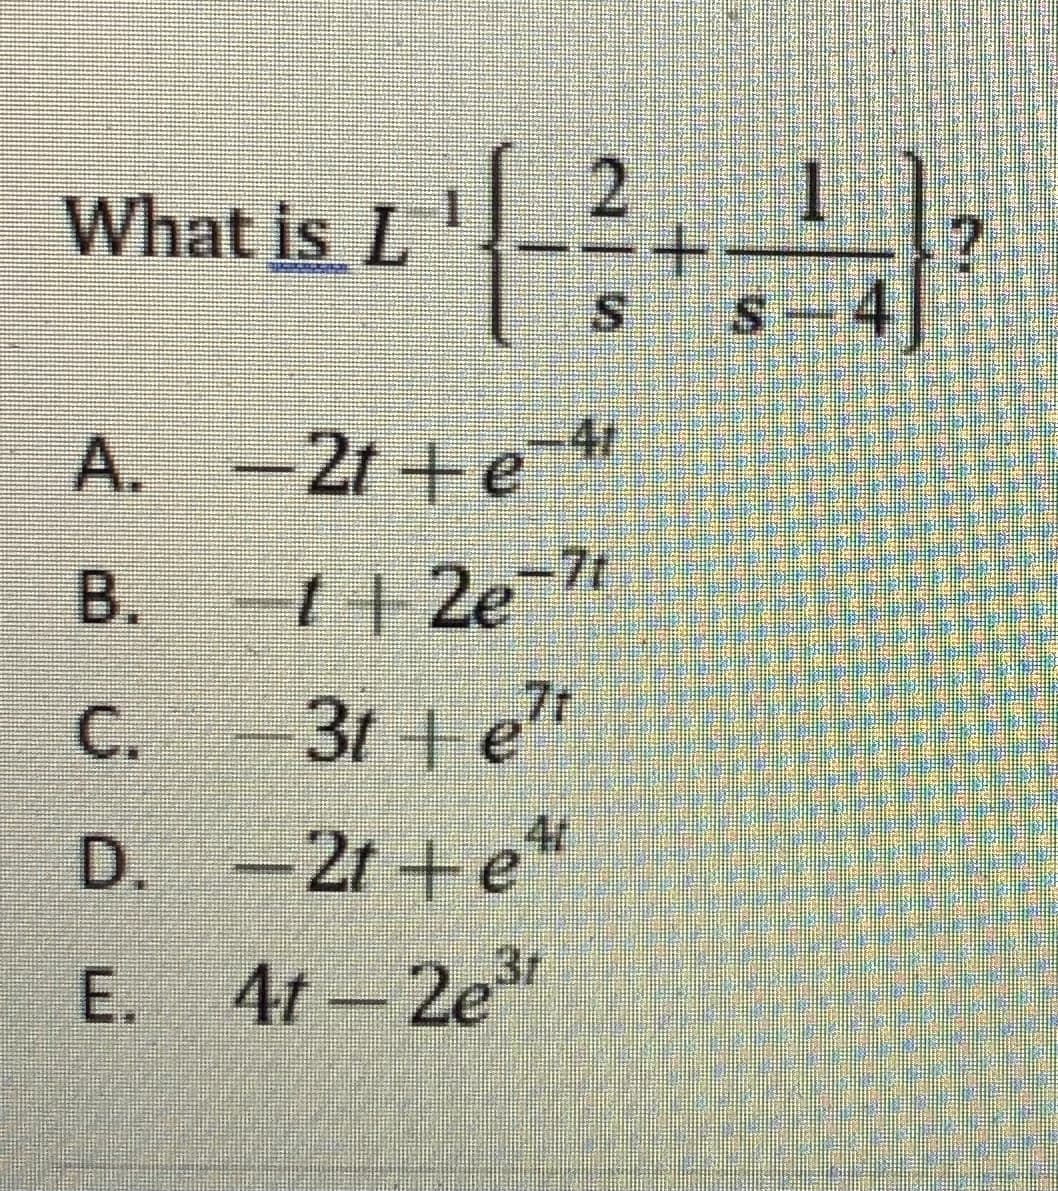 What is L
1f_2 , 1 1
+.
S.
s - 4|
A. -2t +e
4/
7t
B.
t+ 2e
C. -3t +e"
4/
D. -2t +e*
3r
E. 4t-2e"
